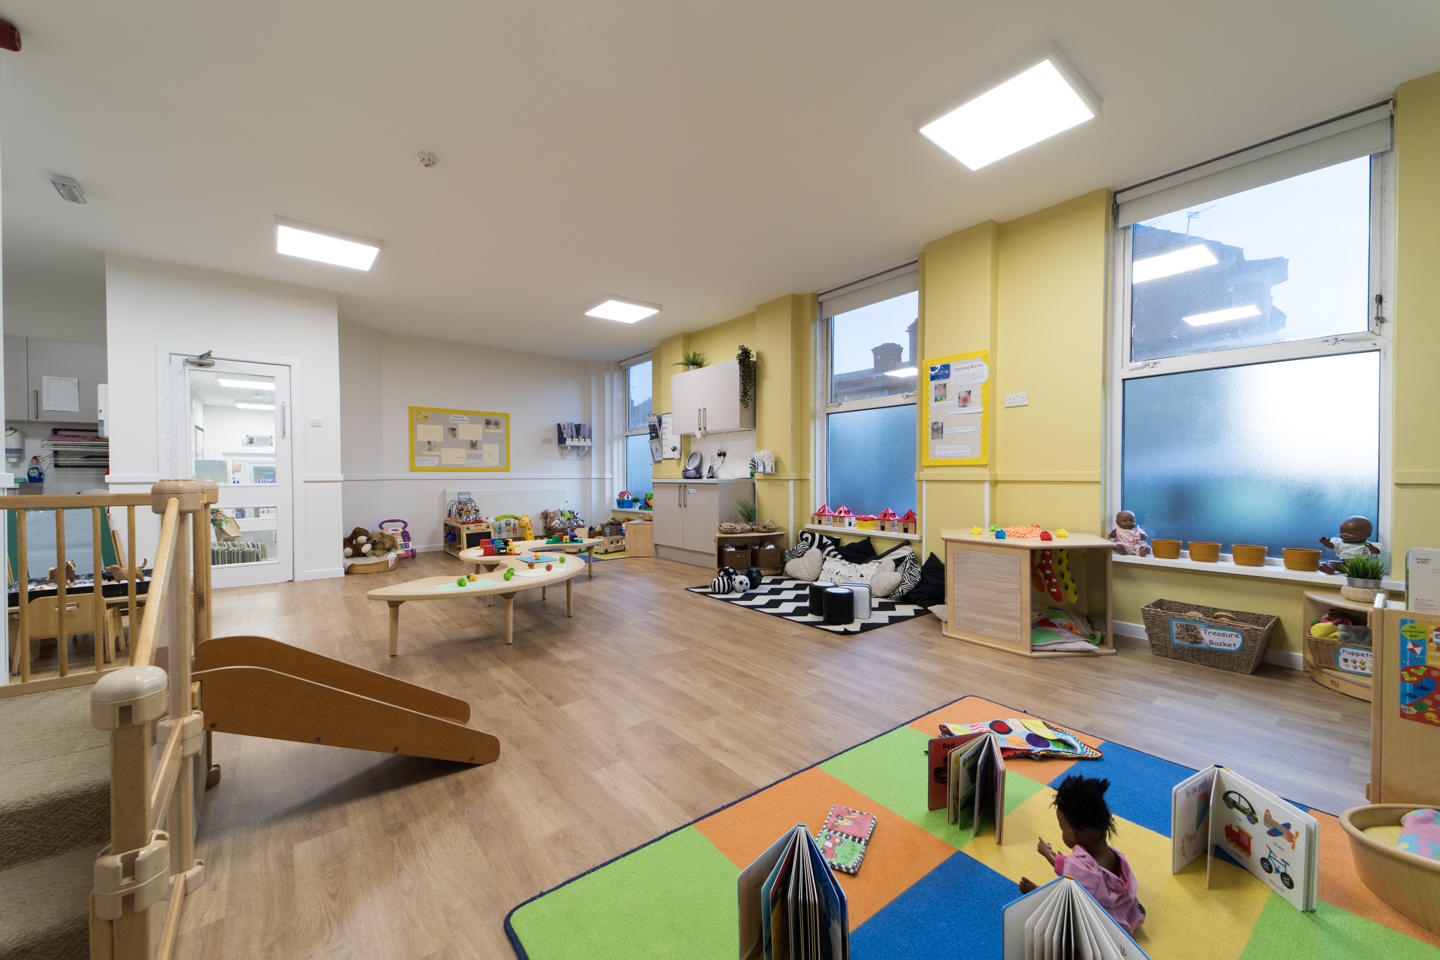 Bright Horizons East Greenwich Day Nursery and Preschool London 03300 574071